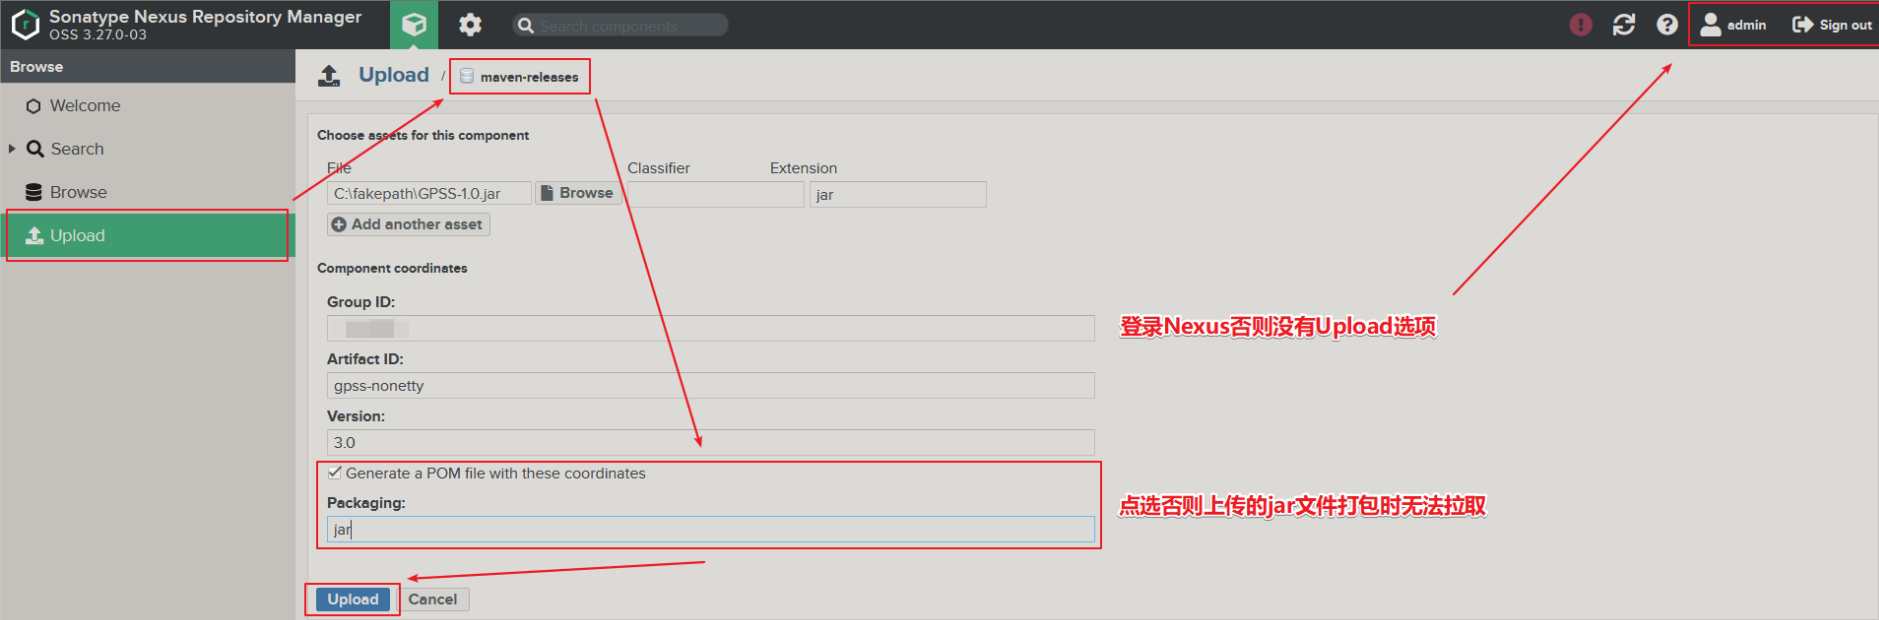 Nexus【应用 01】上传jar包到私有Maven仓库的两种方法：手动 Upload 和 mvn deploy 命令（配置+操作流程）